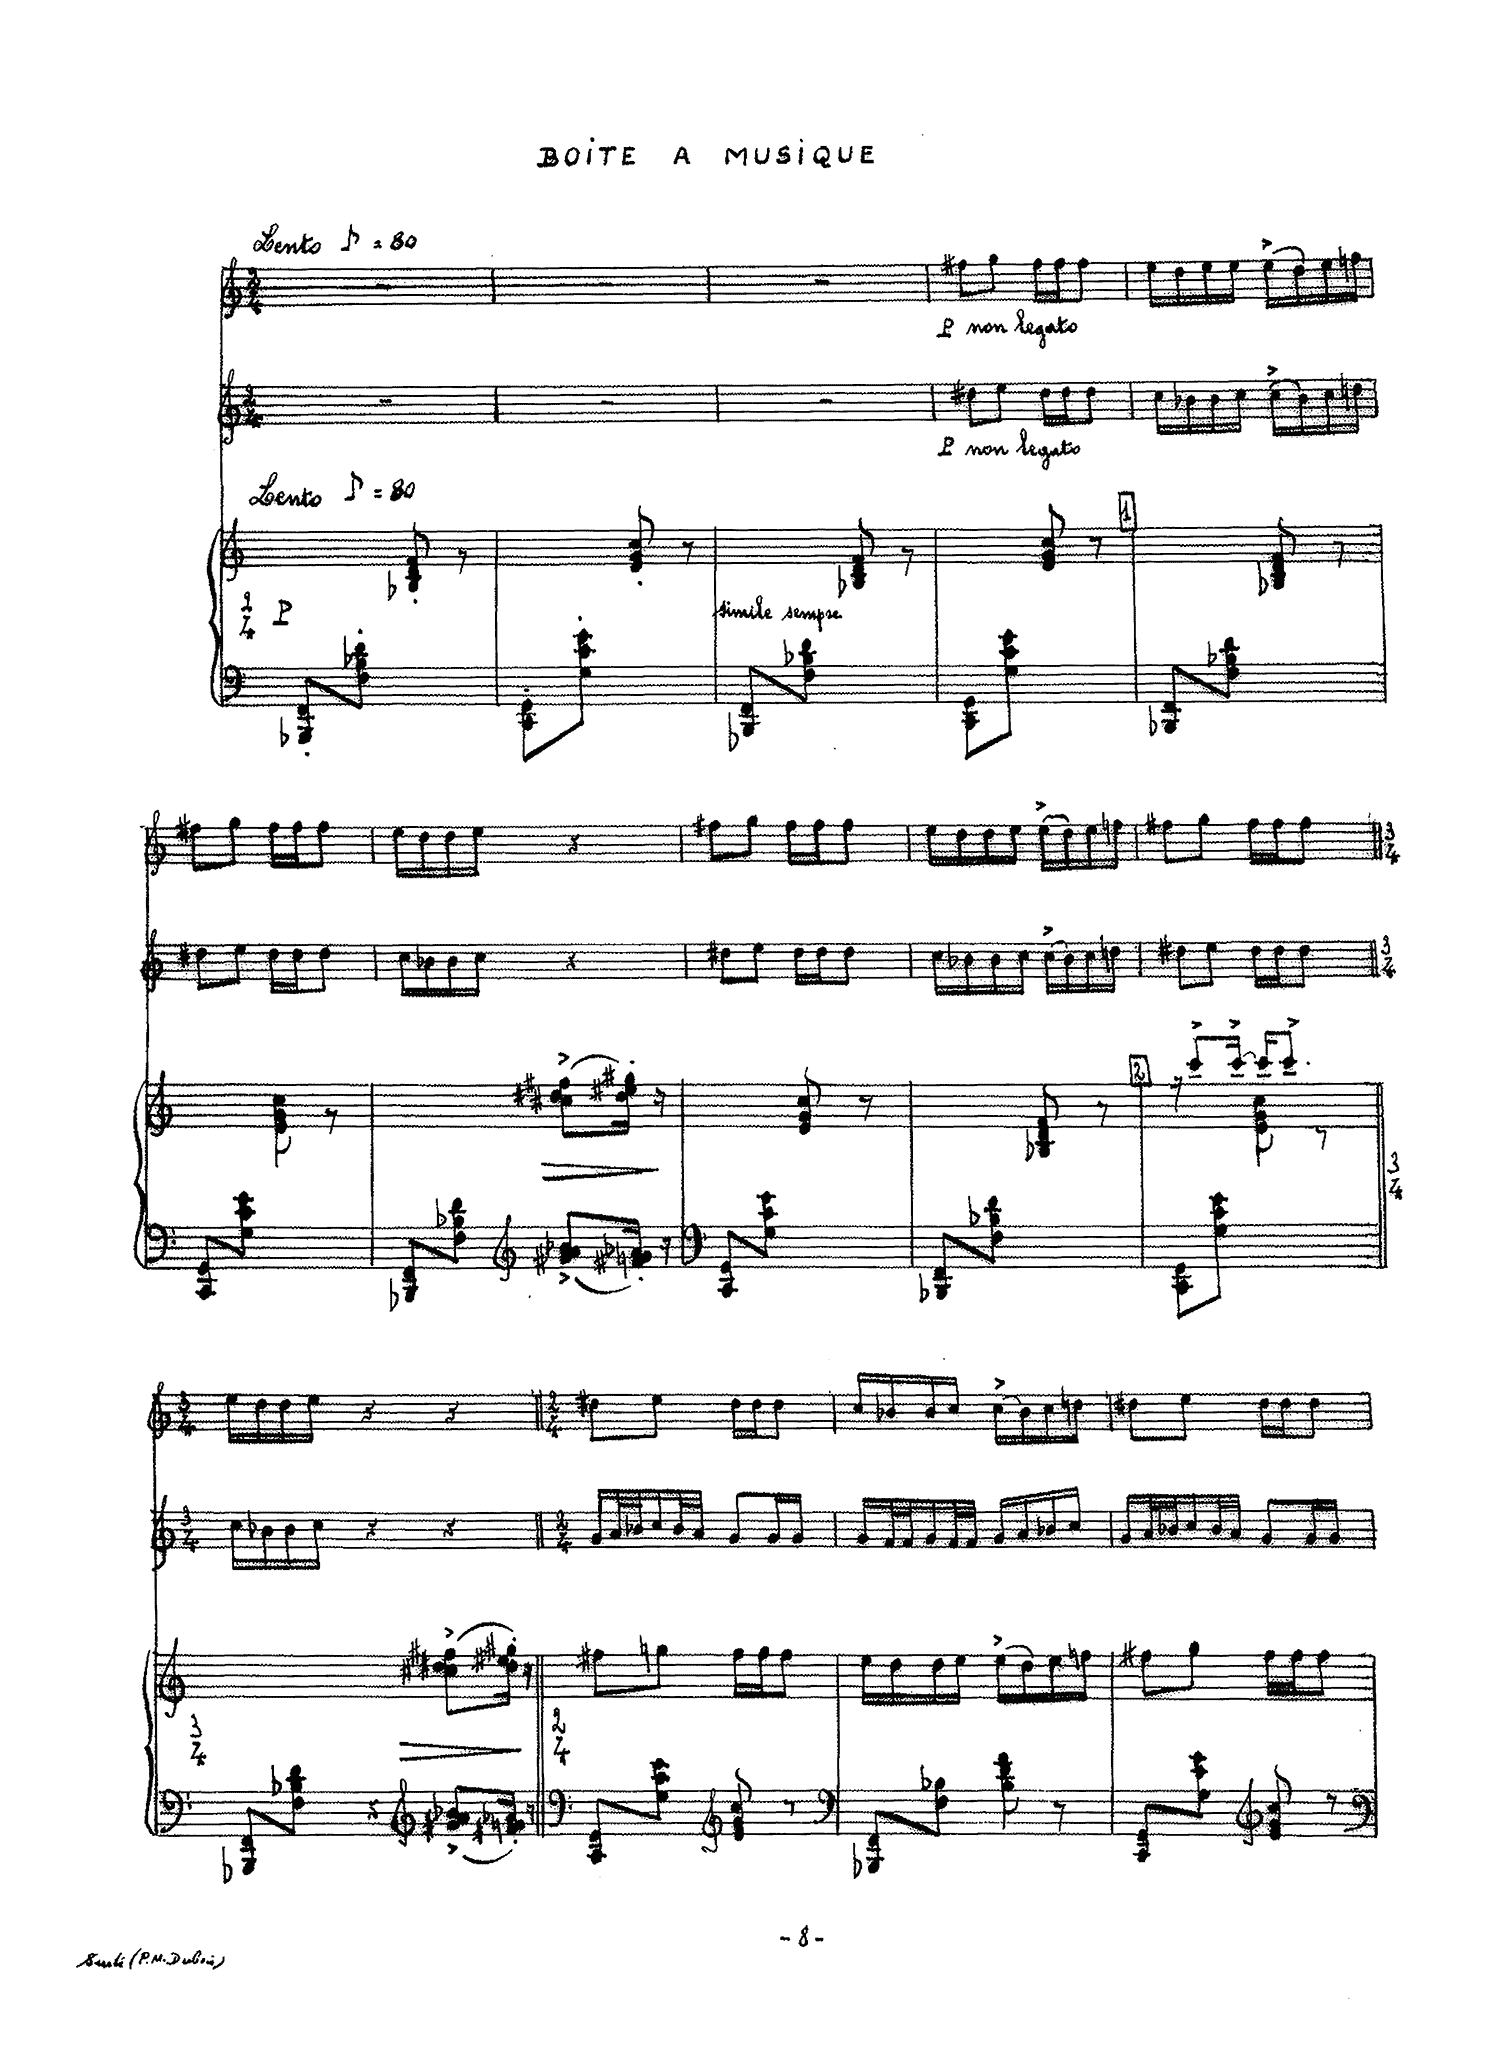 Pierre Max Dubois Suite for clarinet, violin, & piano - Movement 2